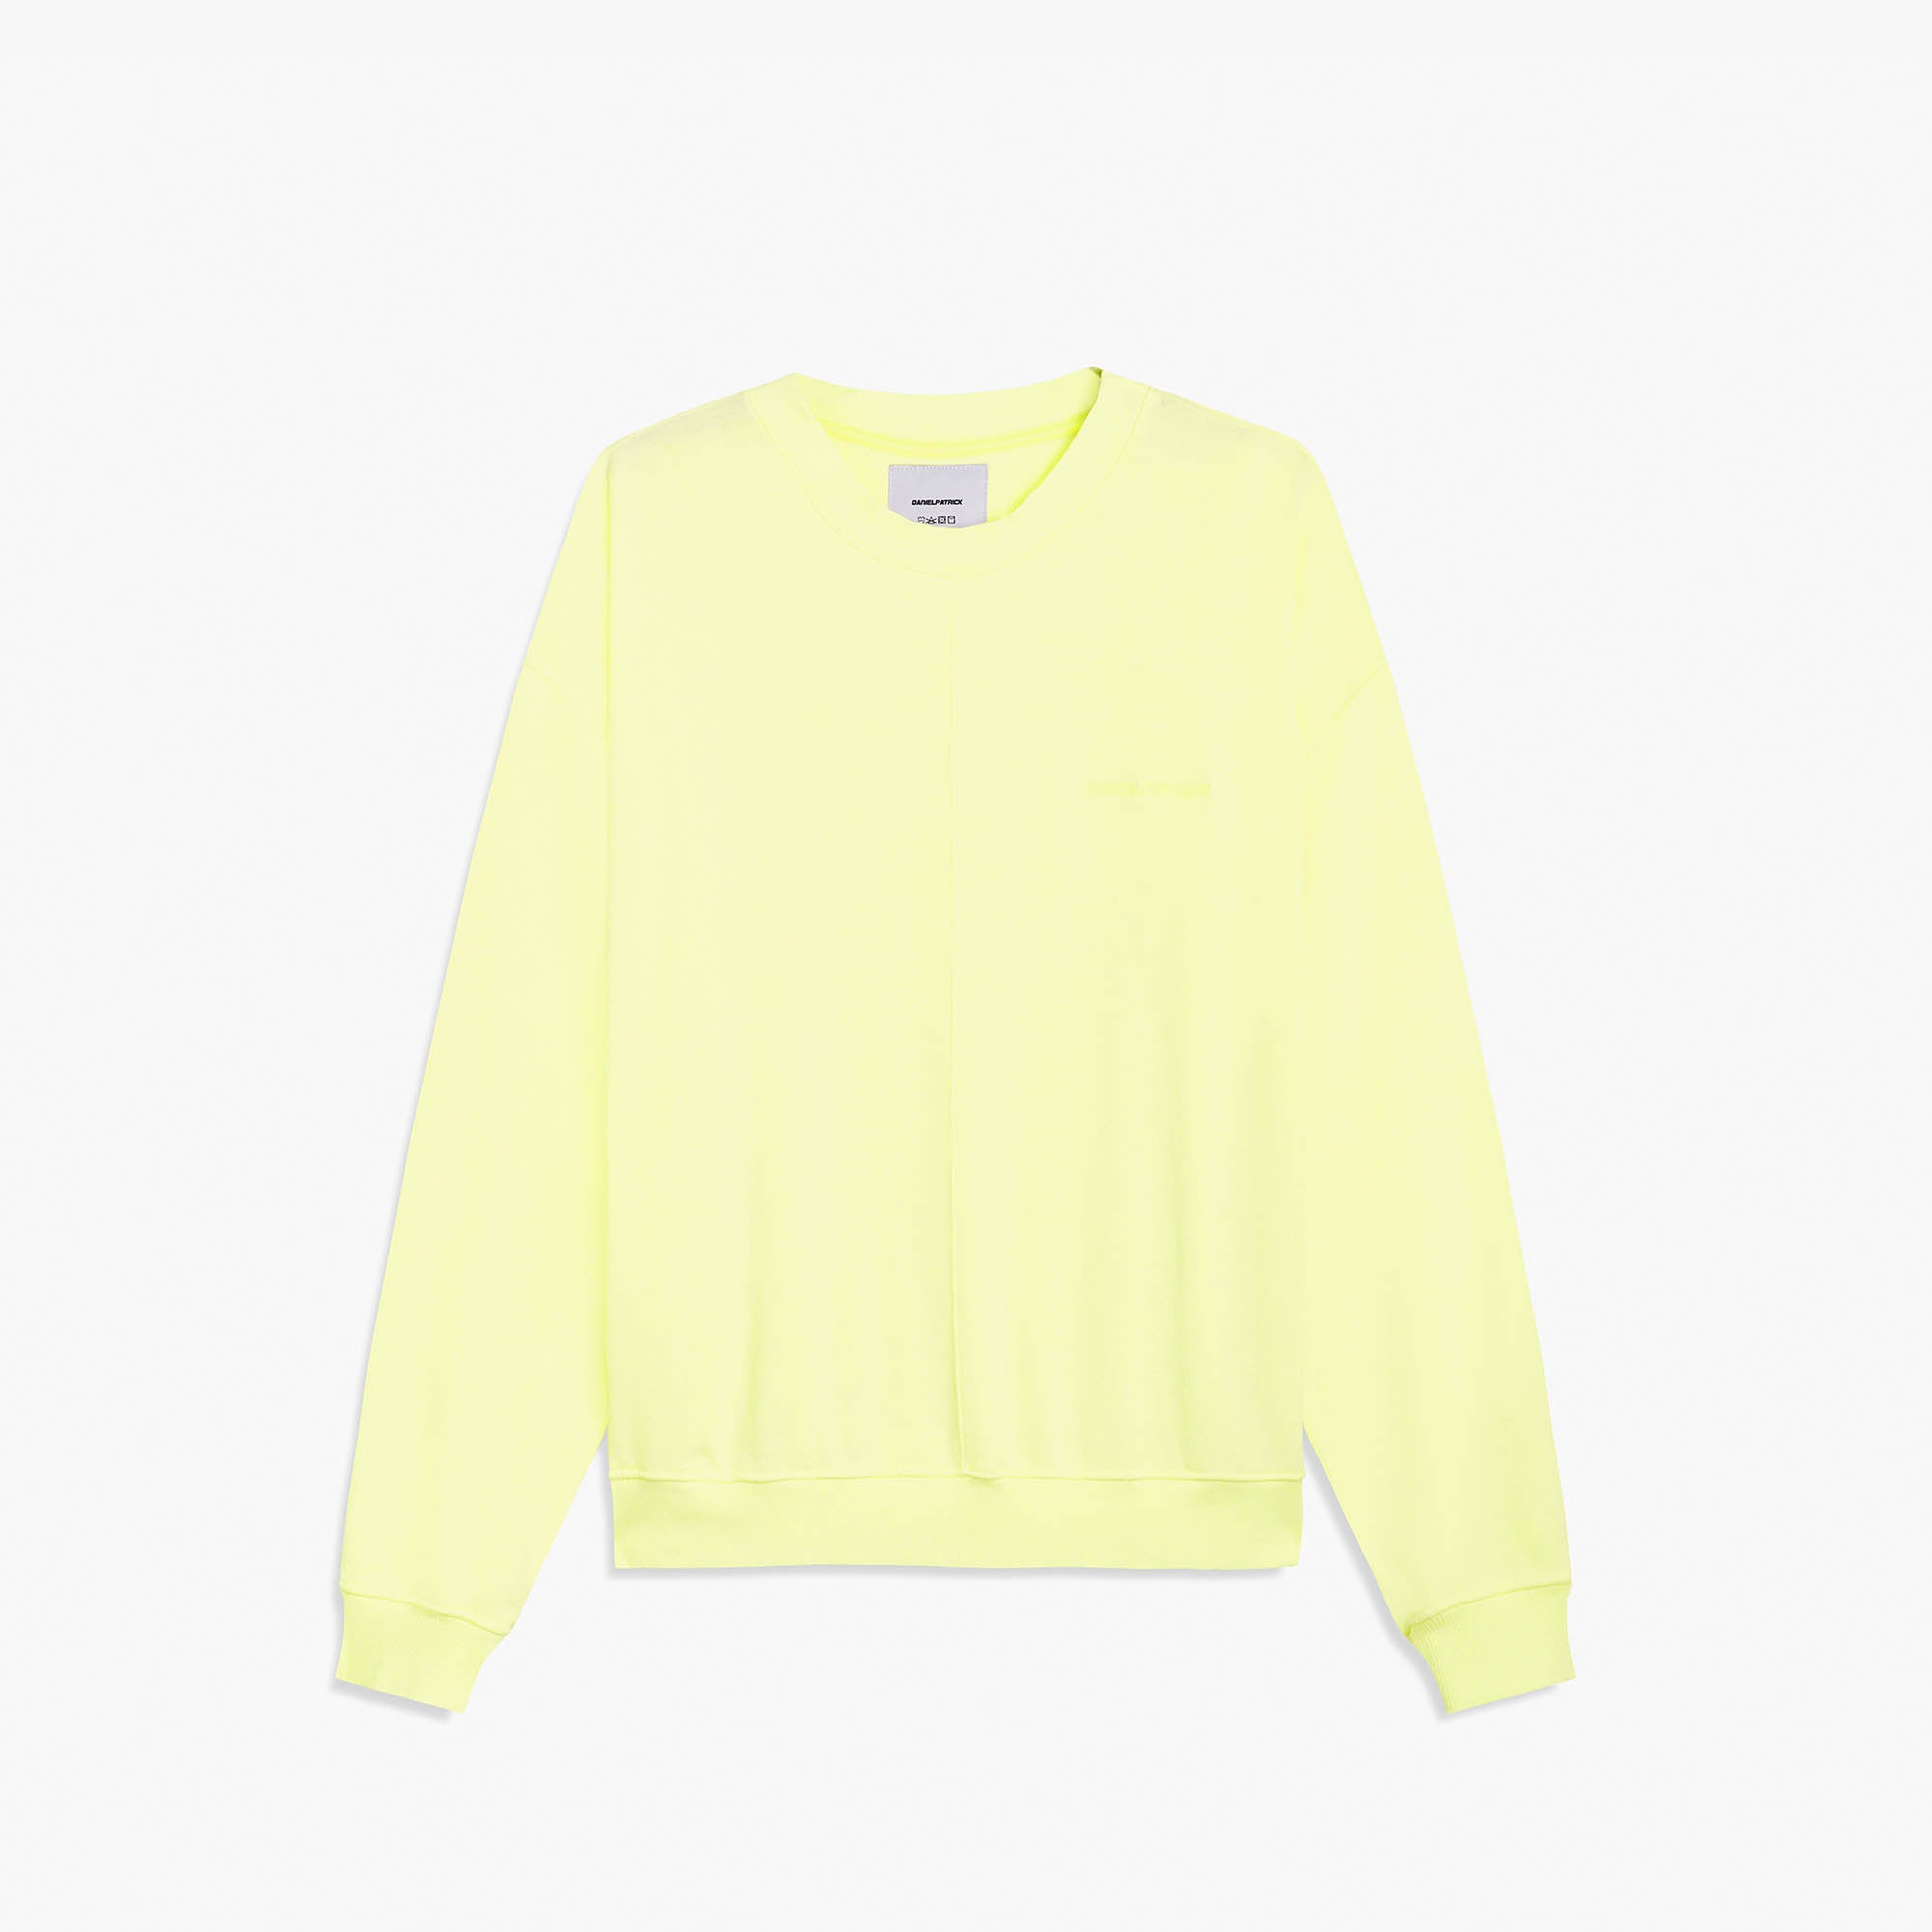 loop terry standard sweatshirt / canary yellow